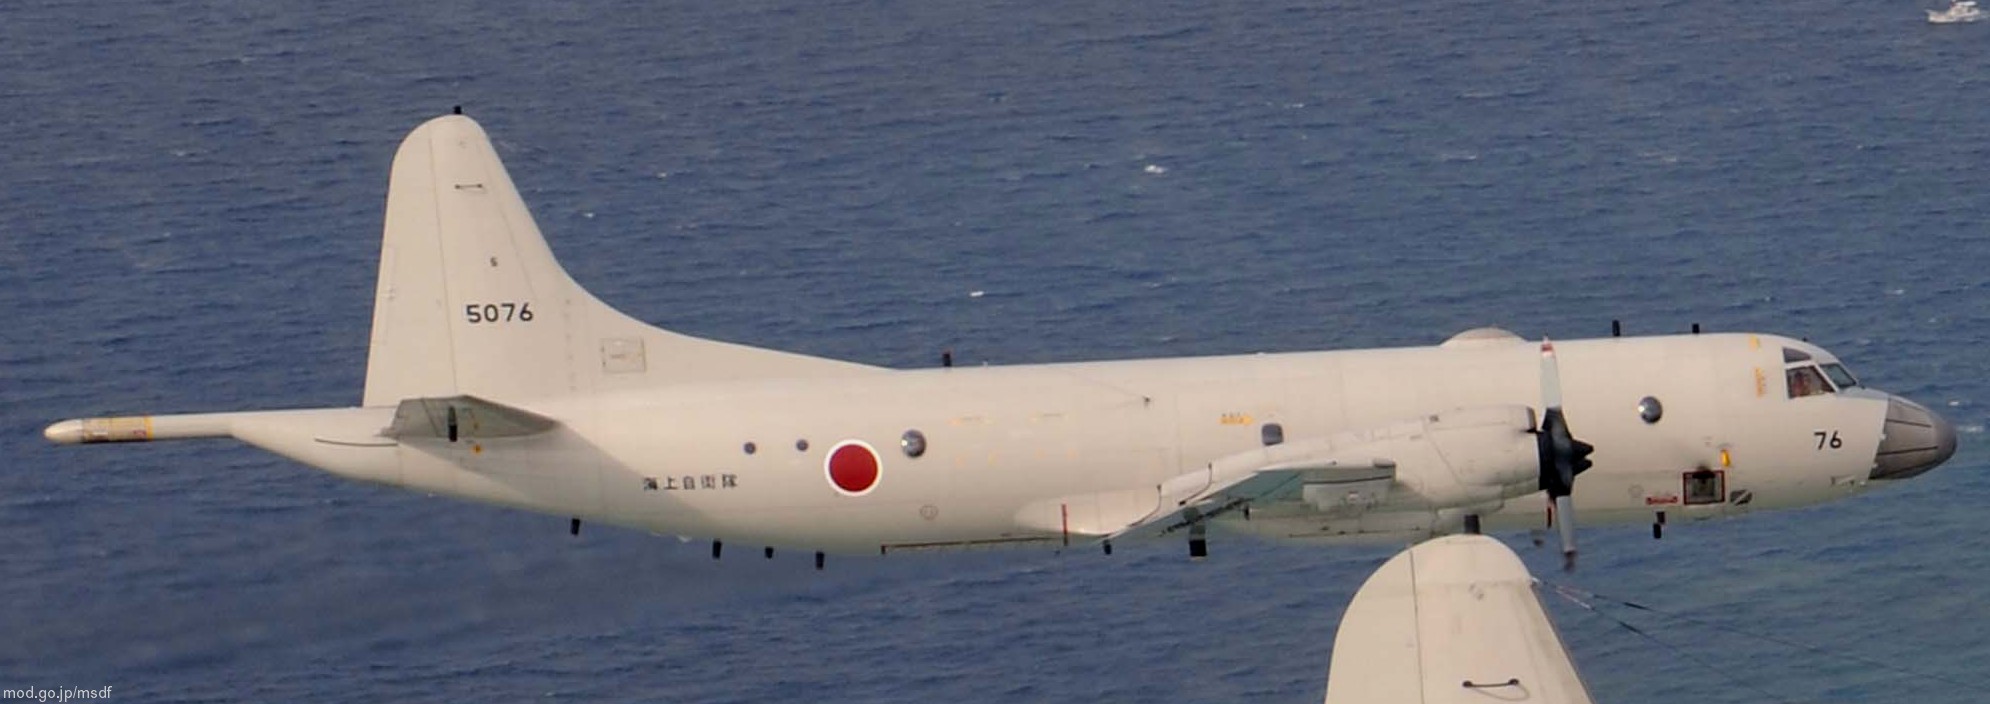 kawasaki p-3c orion patrol aircraft mpa japan maritime self defense force jmsdf 5076 04